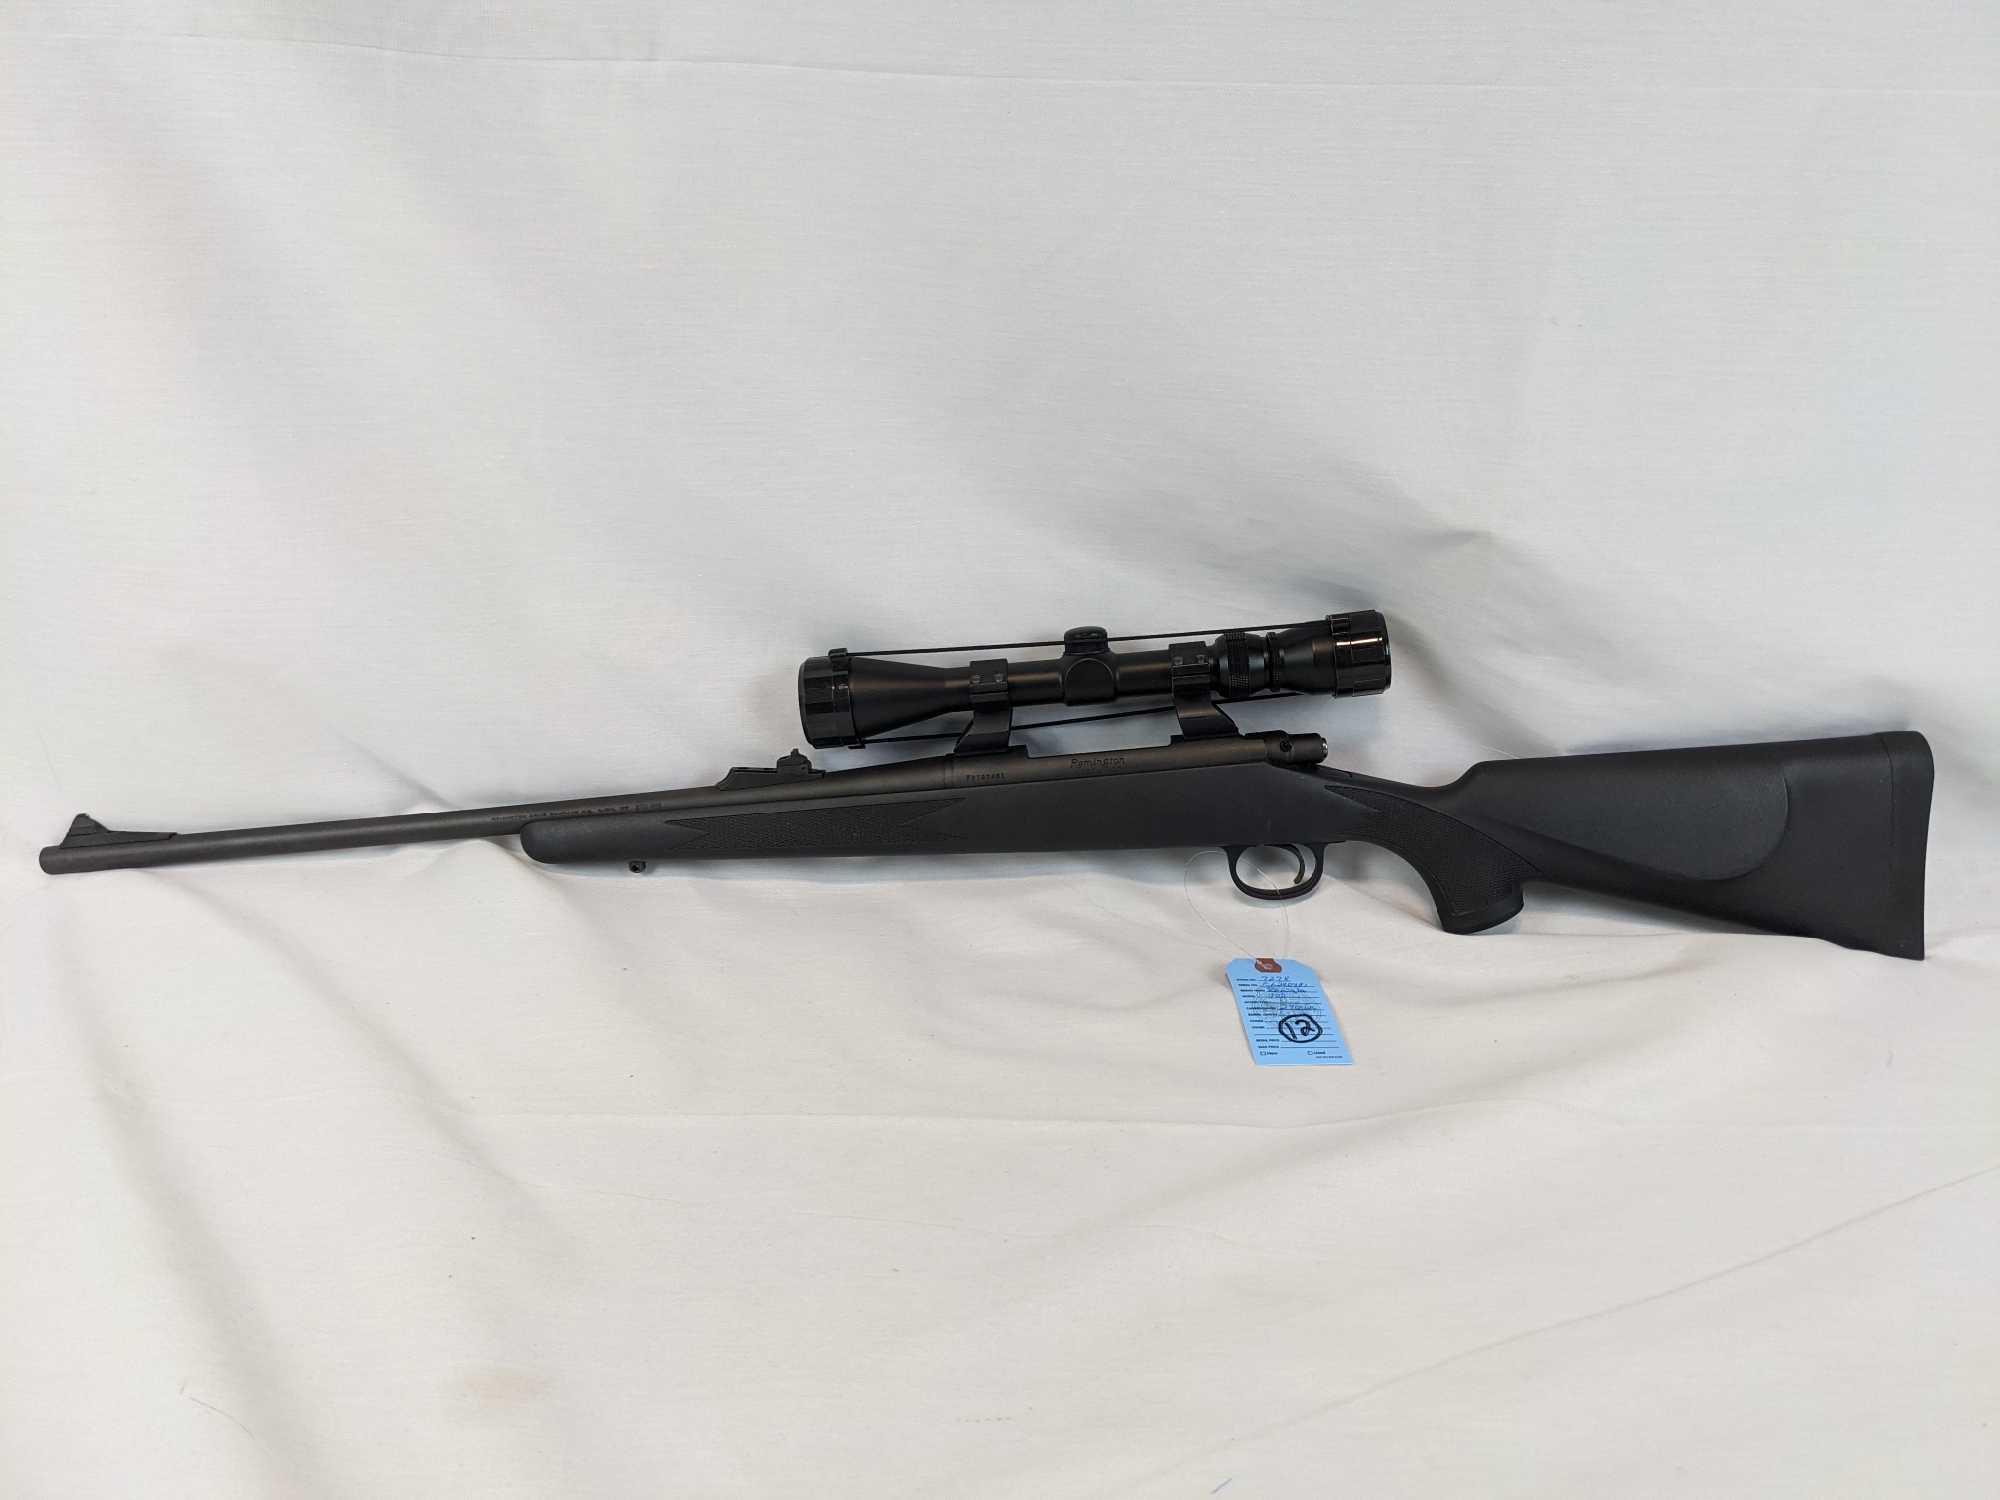 Remington model 700- 270 win -3x-9x40 scope - 85%